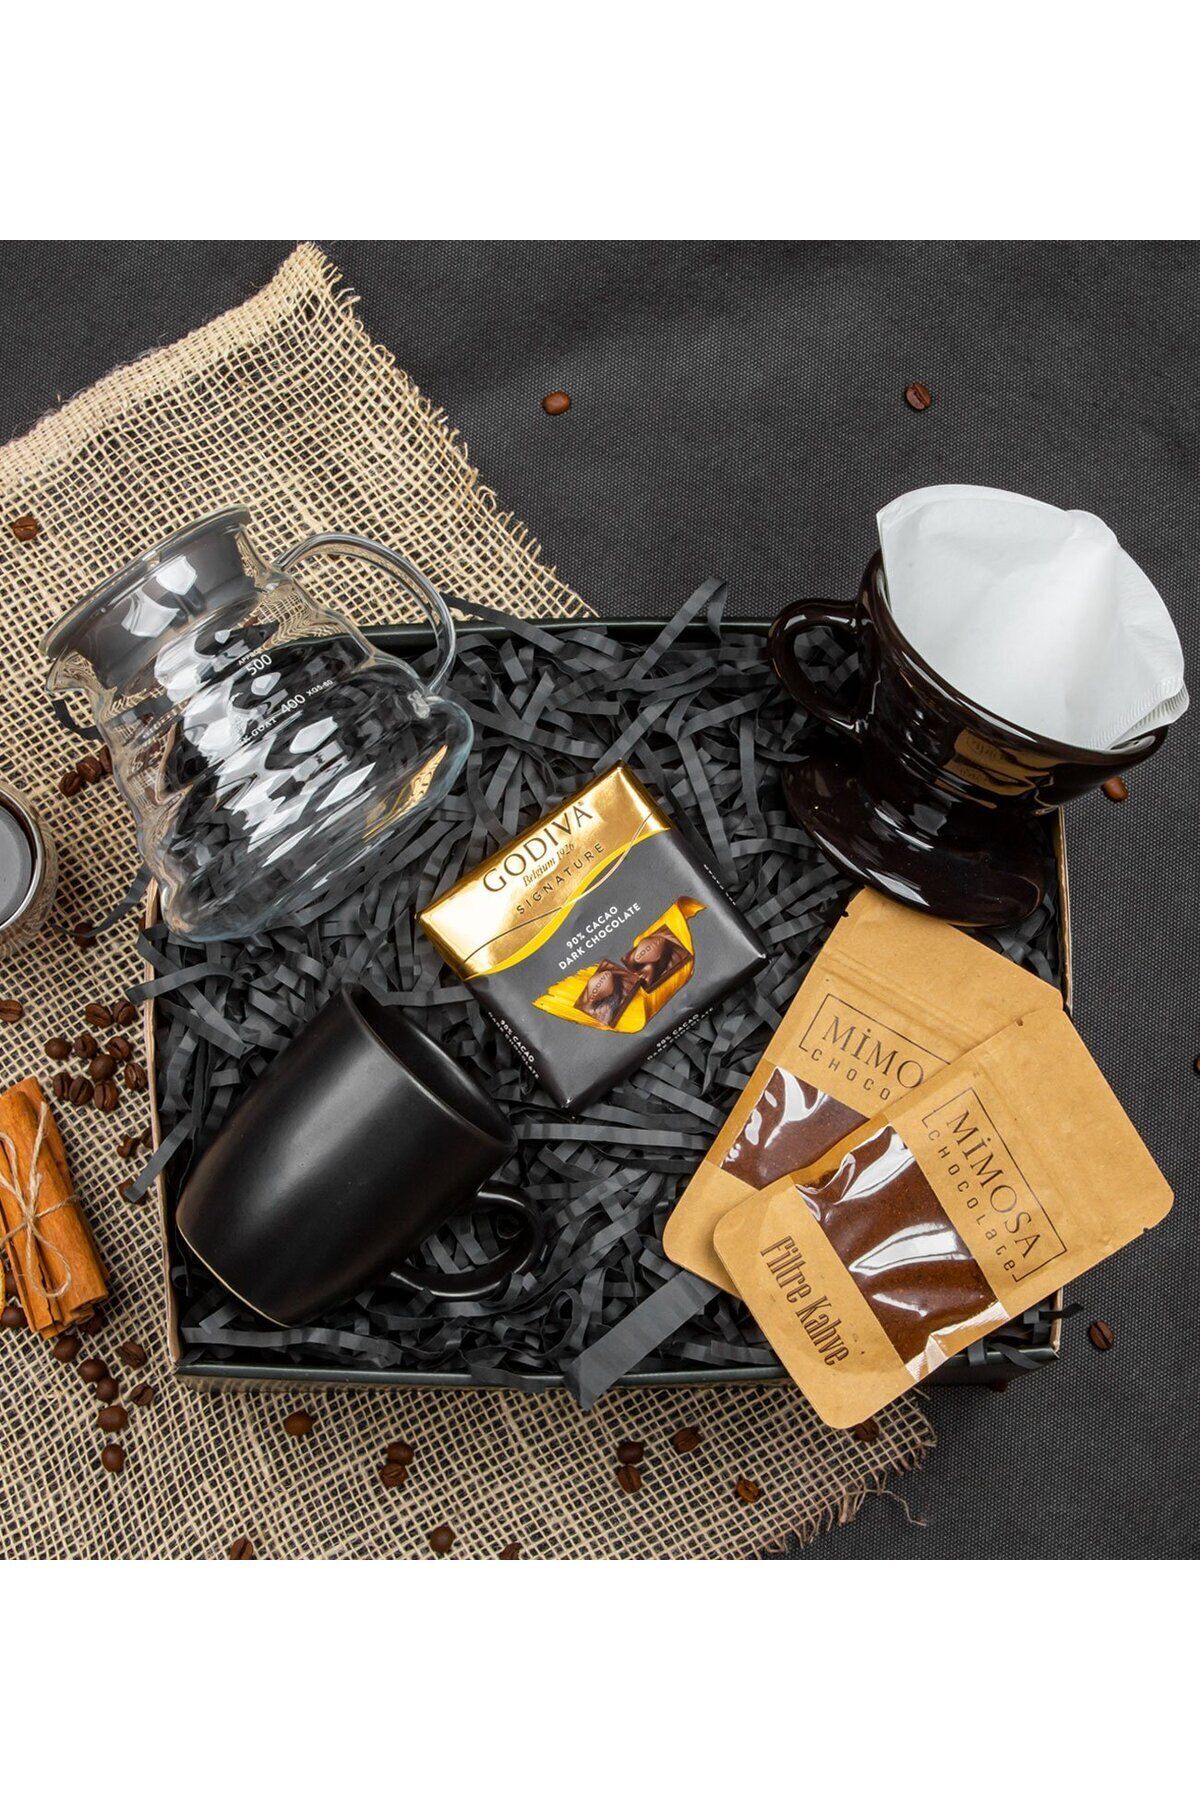 ATÖLYE247 Kahve Sürahisi Siyah Dripper Filtre Kahve Kağıdı Siyah Kupa Filtre Kahve Godiva Çikolata Hediye Seti